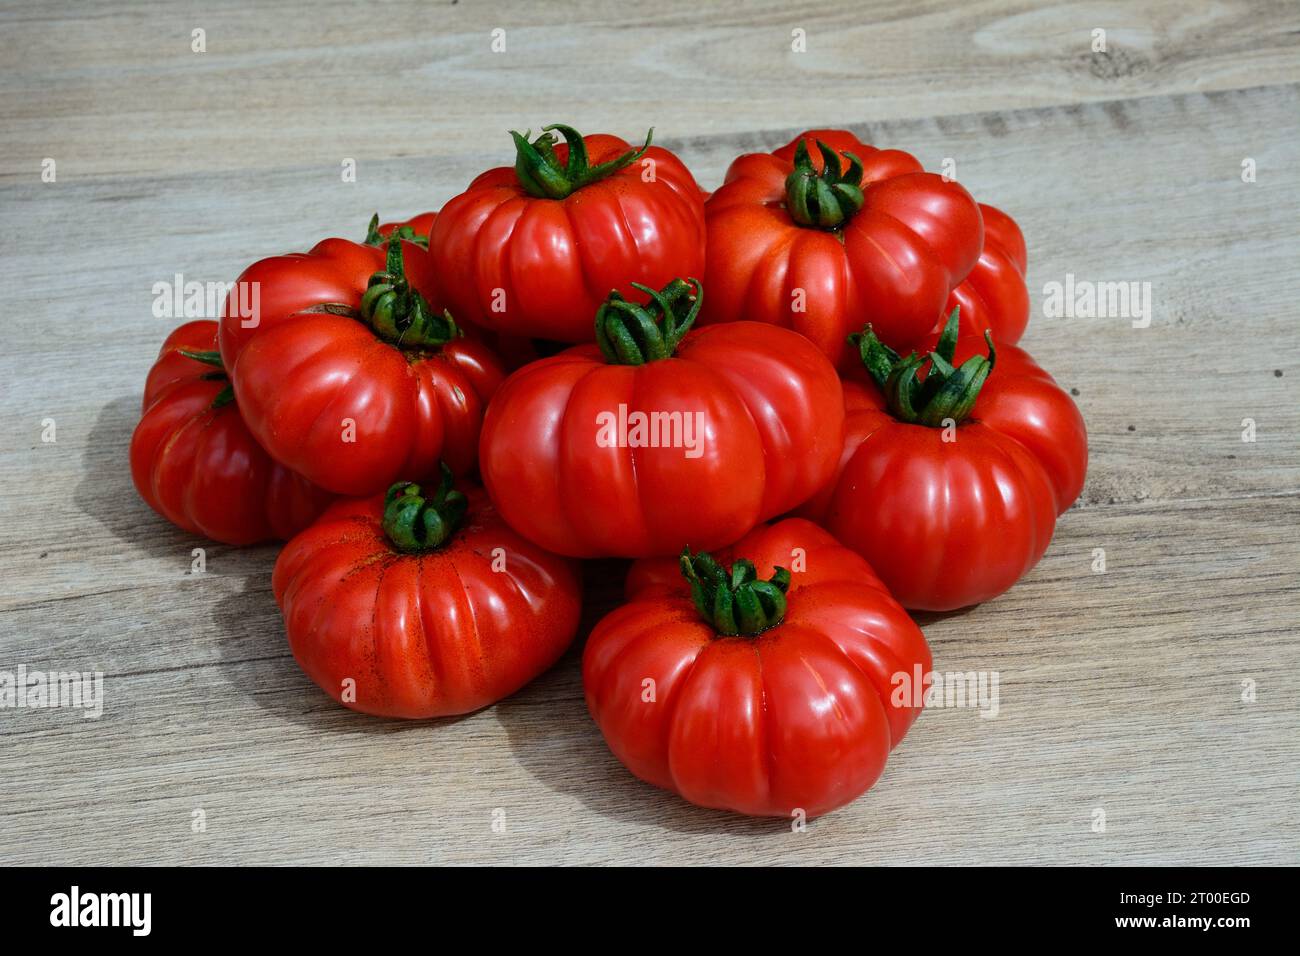 Harvested ripe Costoluto Fiorentino tomatoes in a pile, UK, Europe Stock Photo